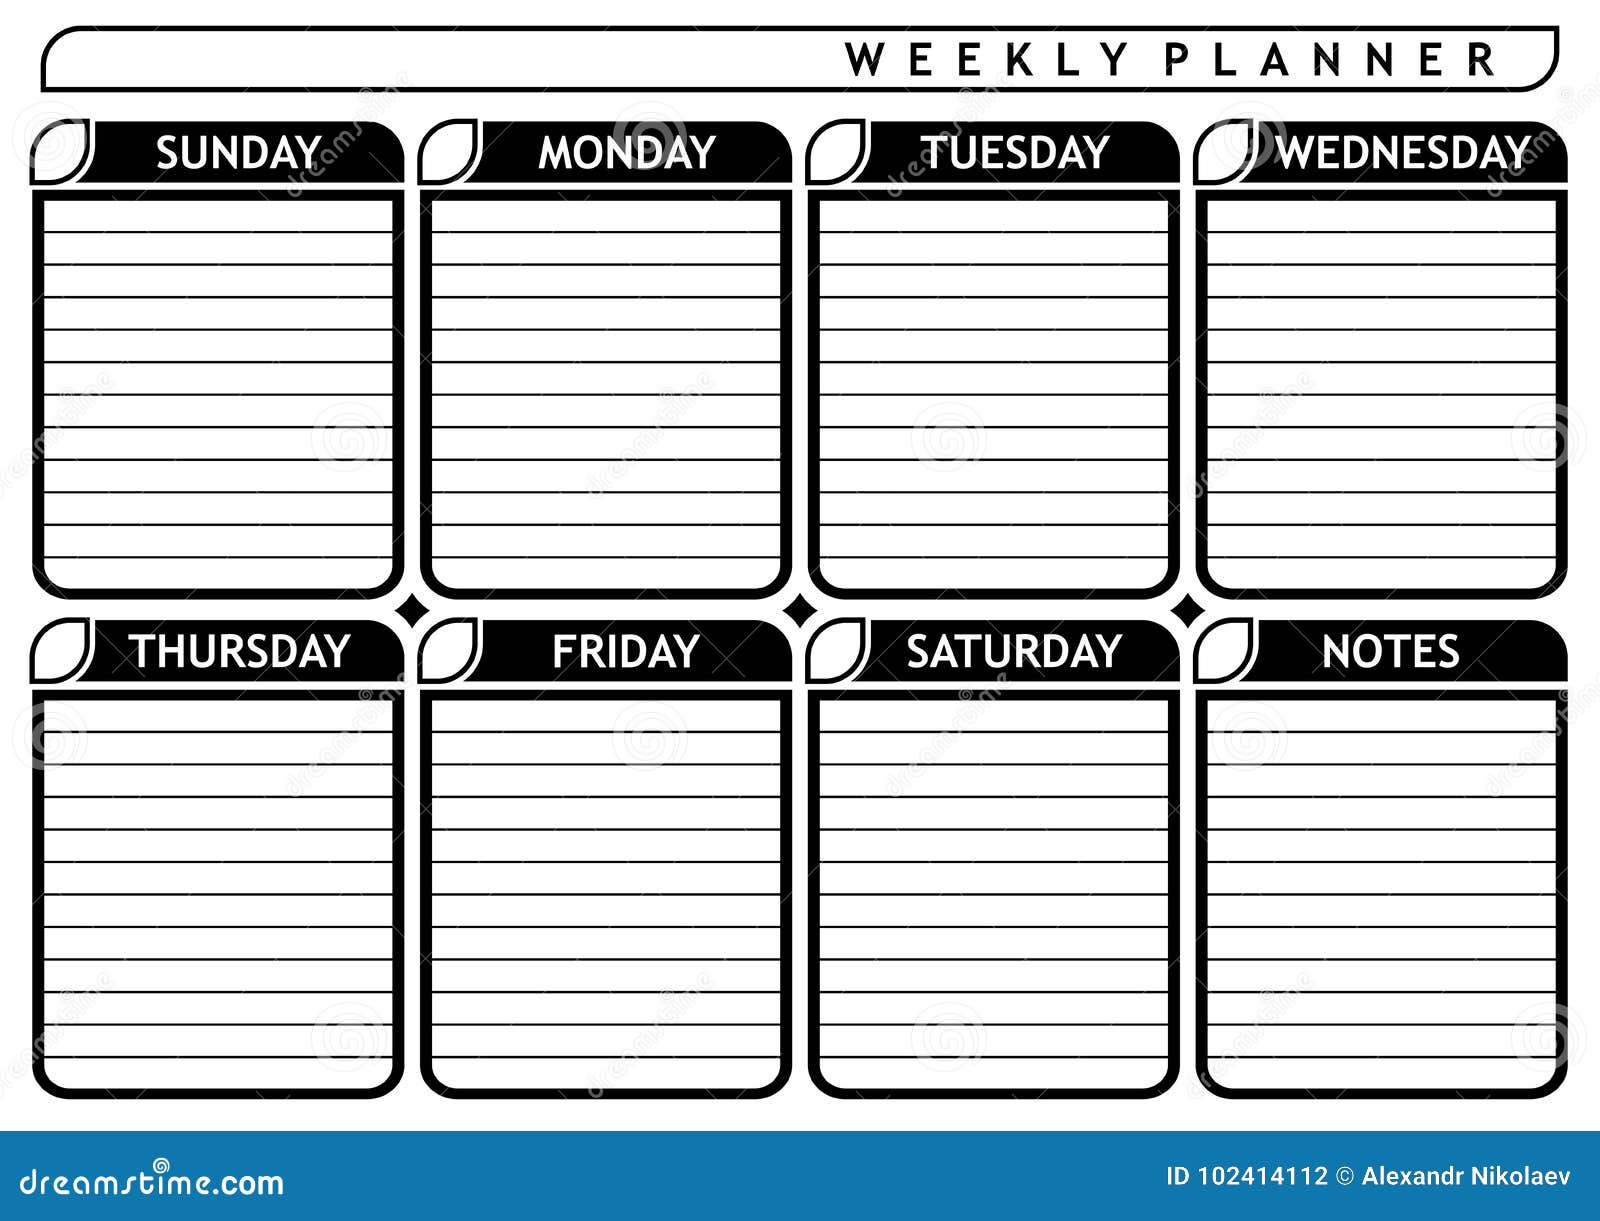 weekly planner blank schedule routine